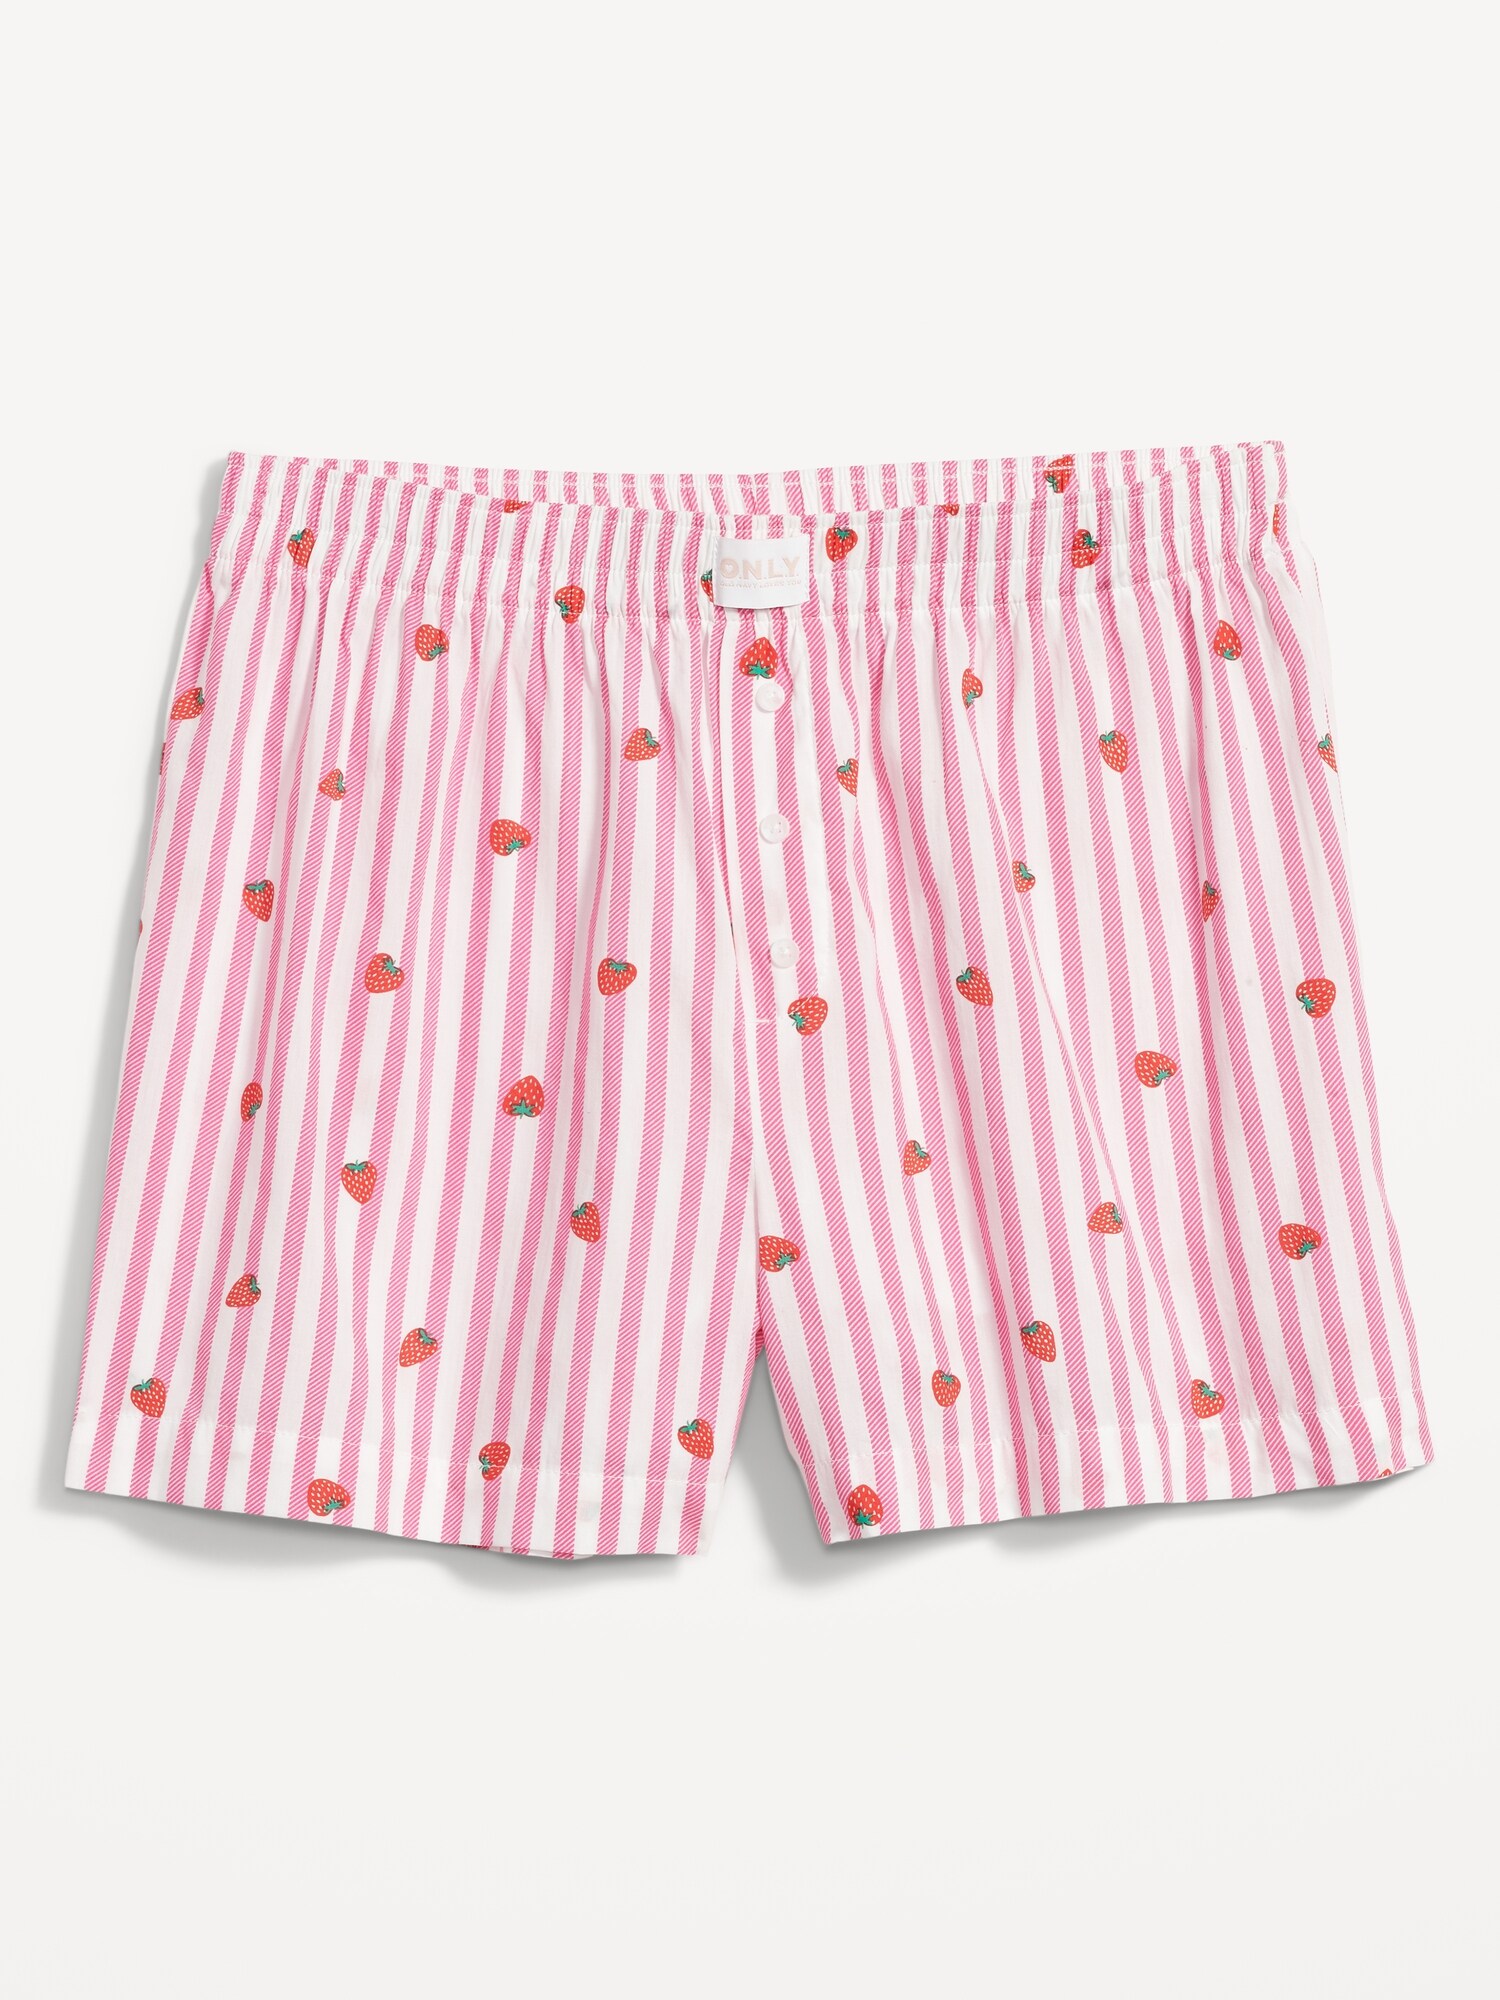 Matching High-Waisted Printed Pajama Boxer Shorts - 3.5-inch inseam